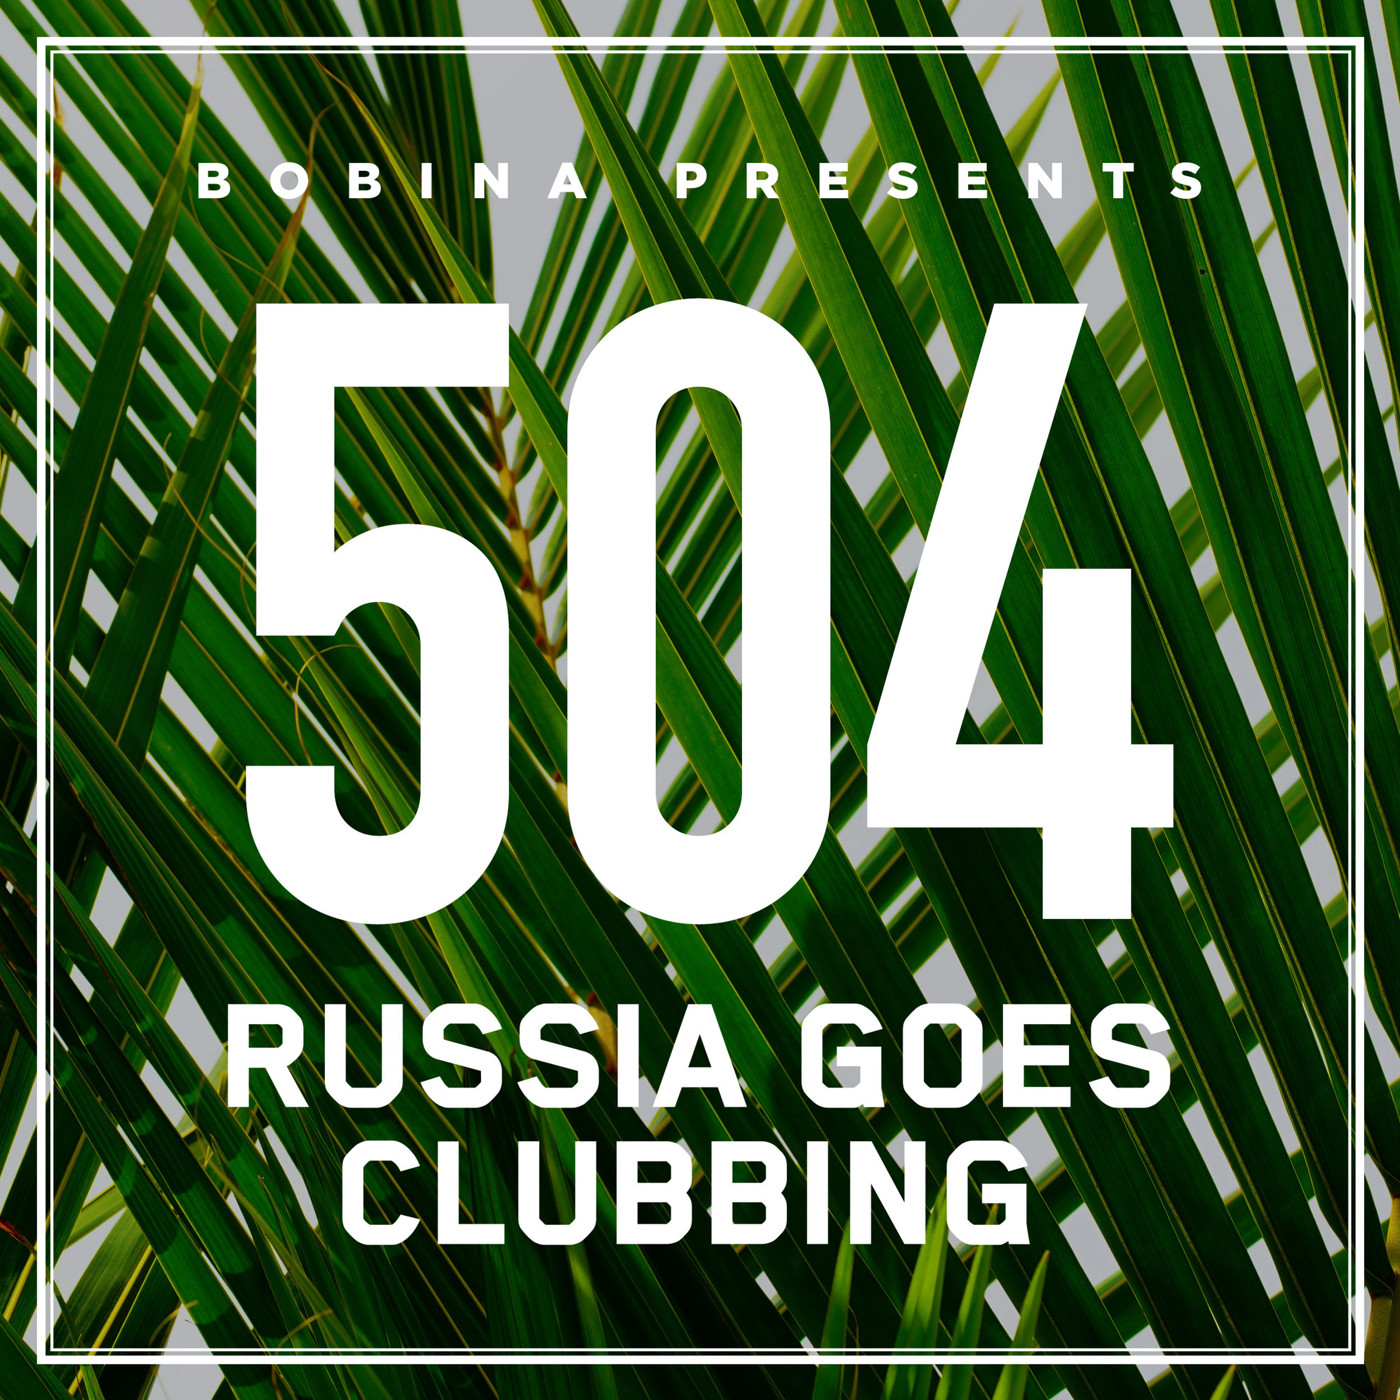 Bobina – Nr. 504 Russia Goes Clubbing (Rus)